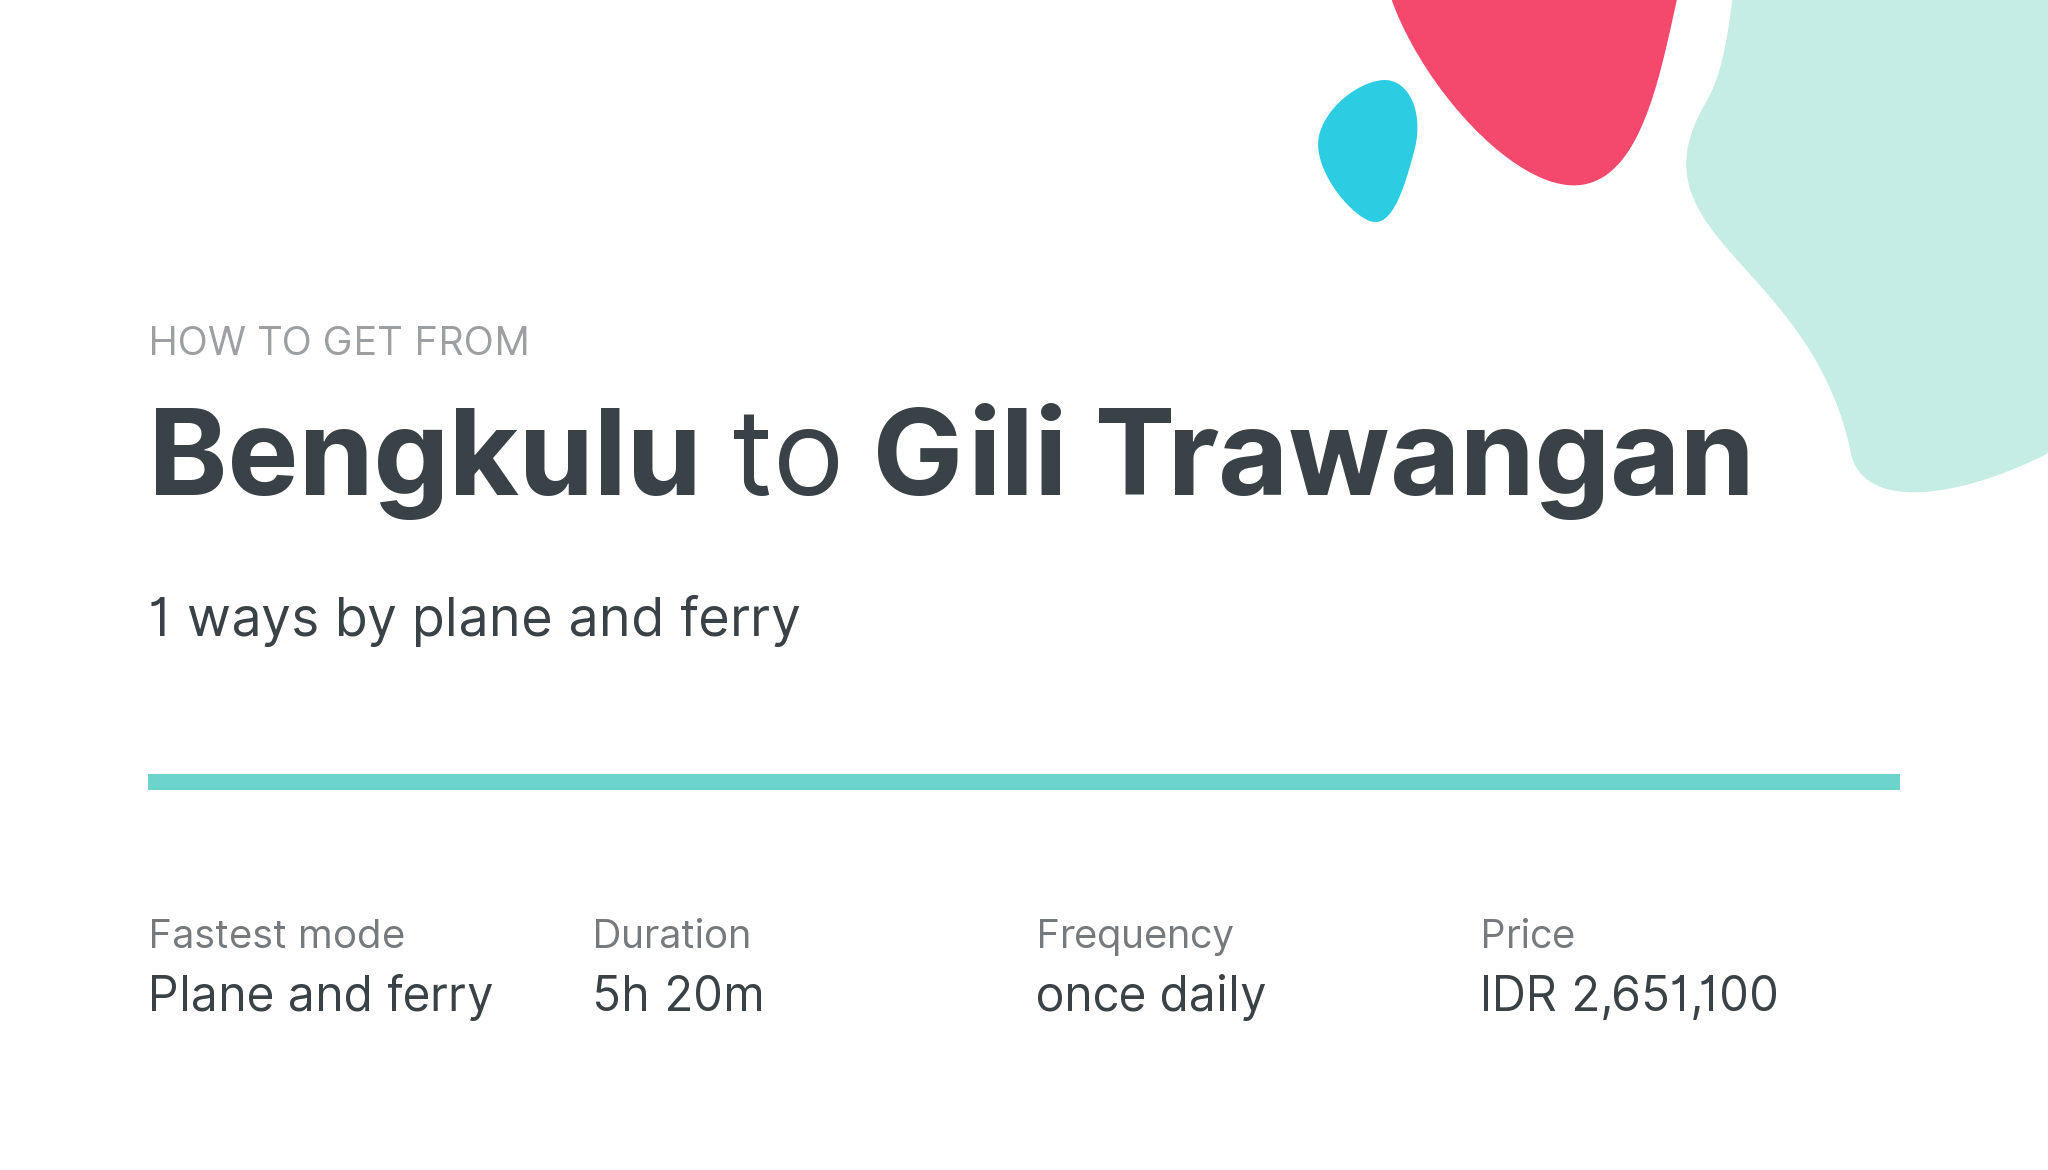 How do I get from Bengkulu to Gili Trawangan